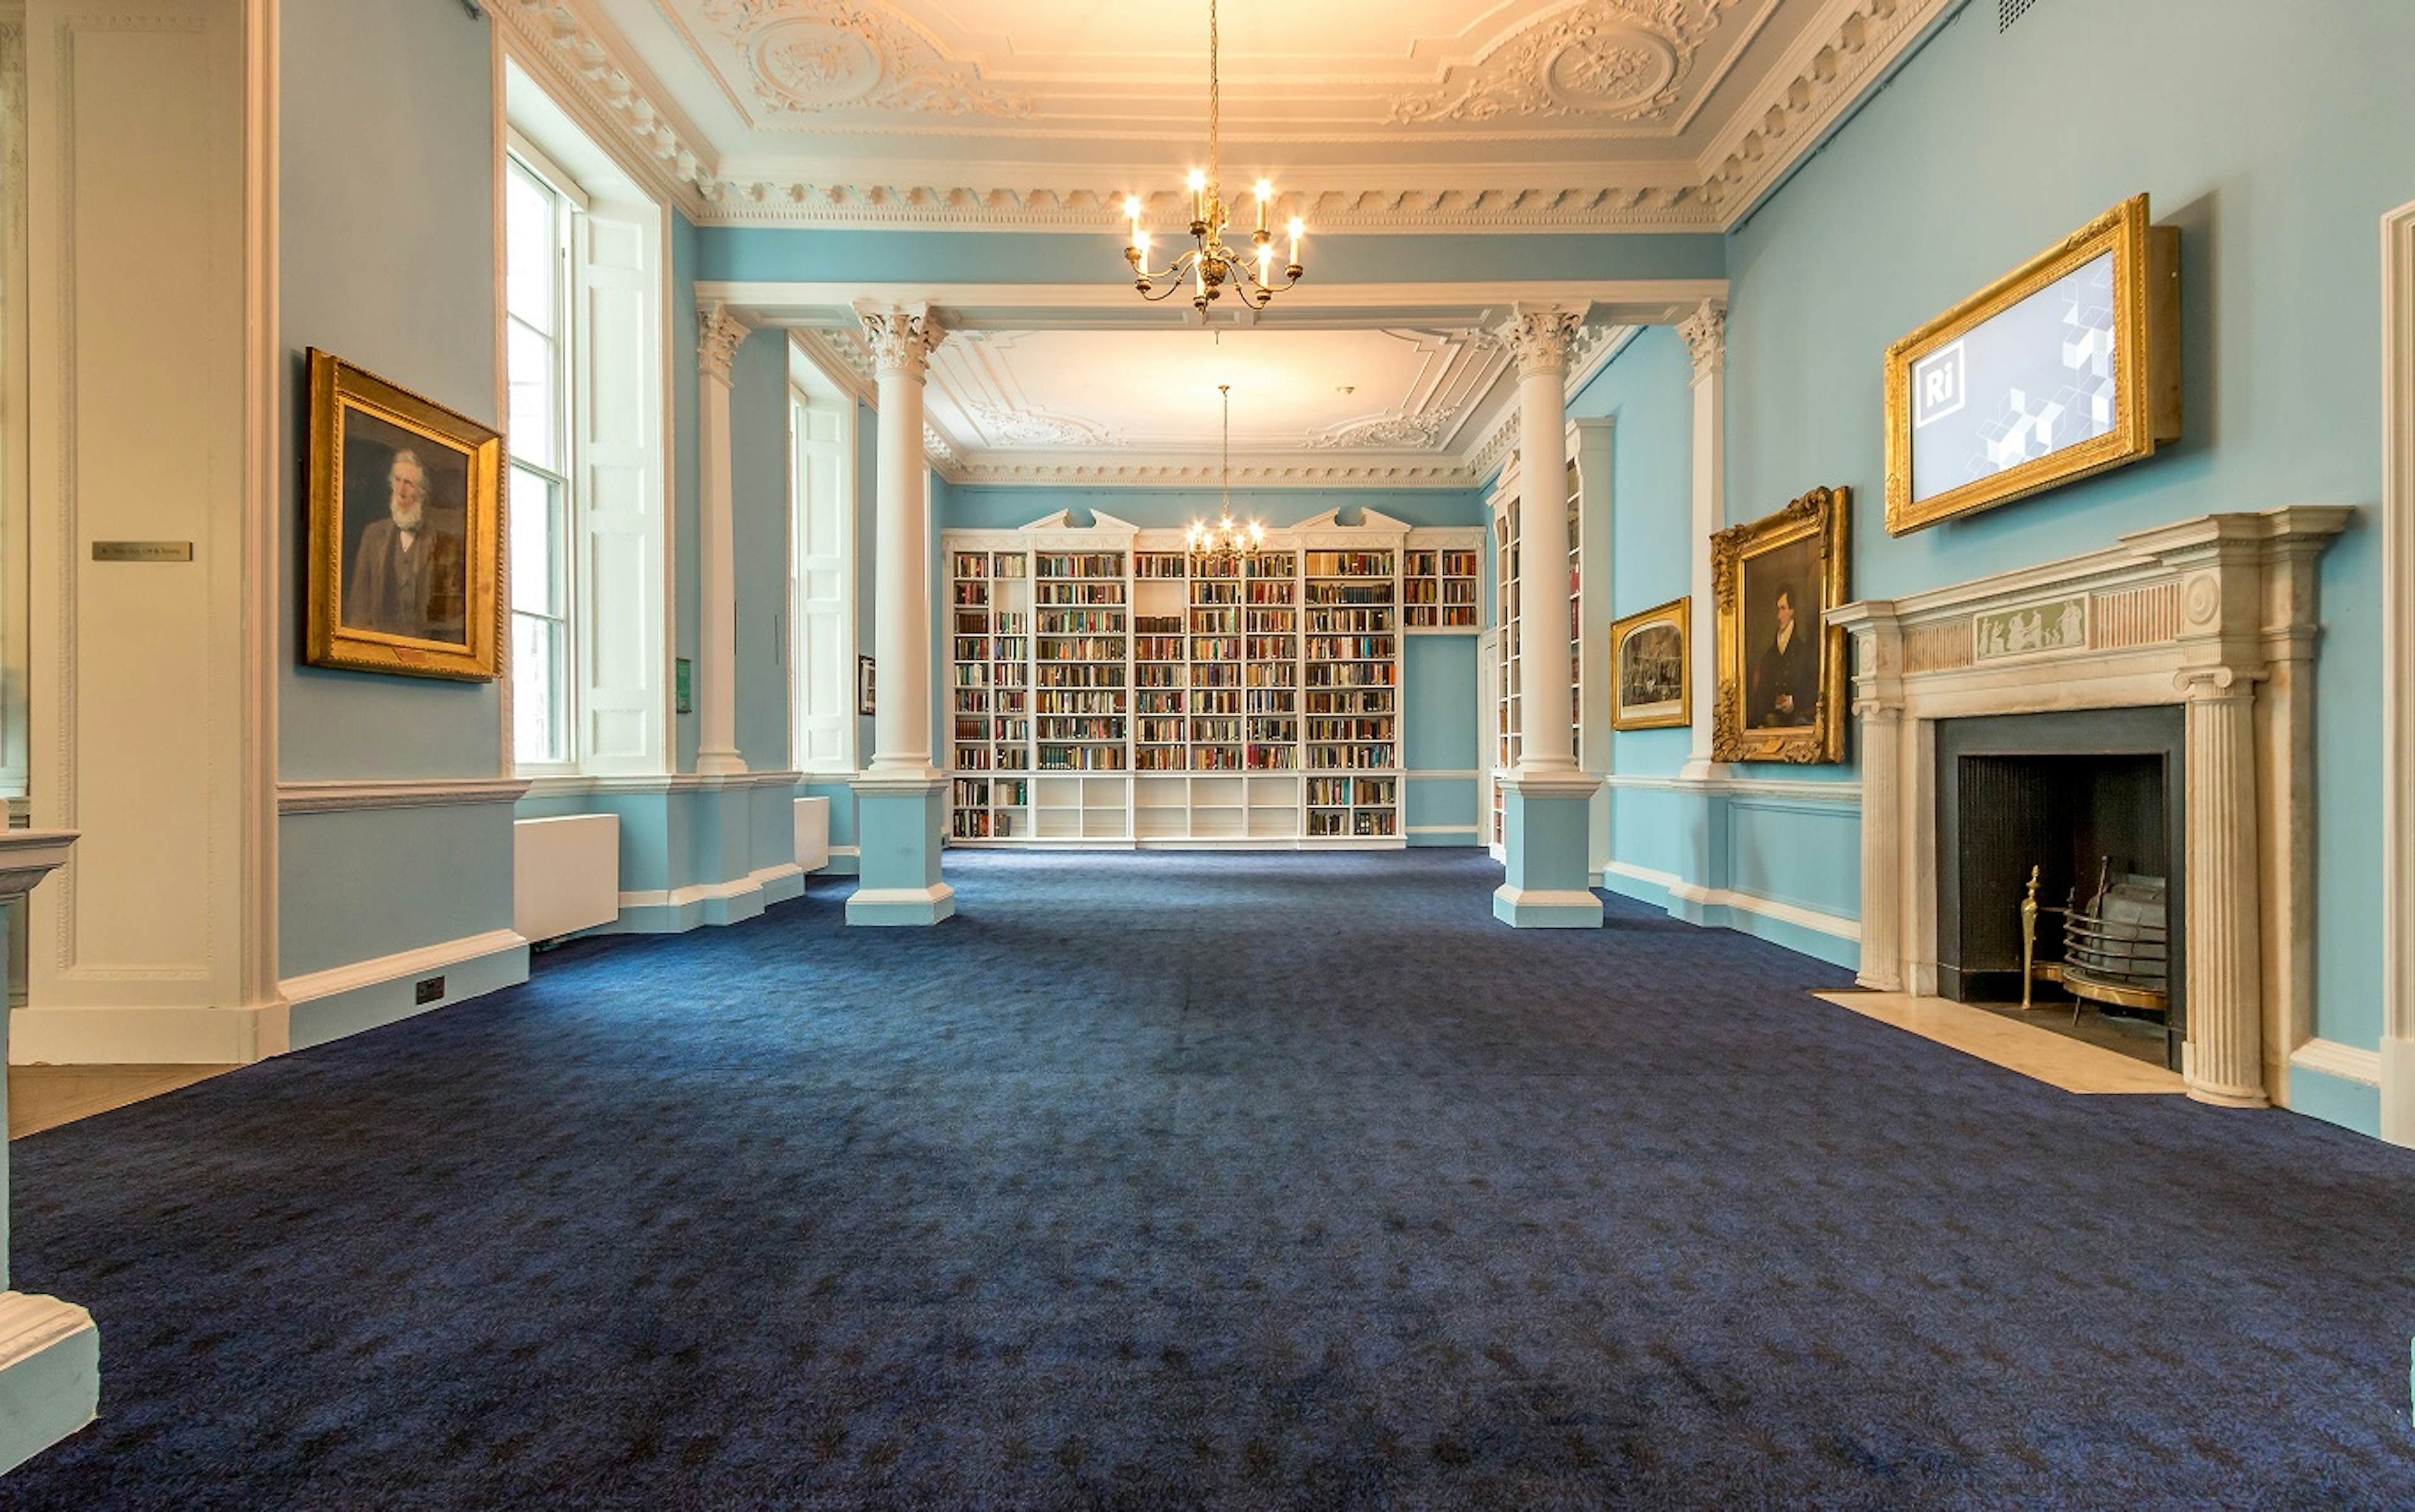 Royal Institution Venue - The Georgian Room image 1